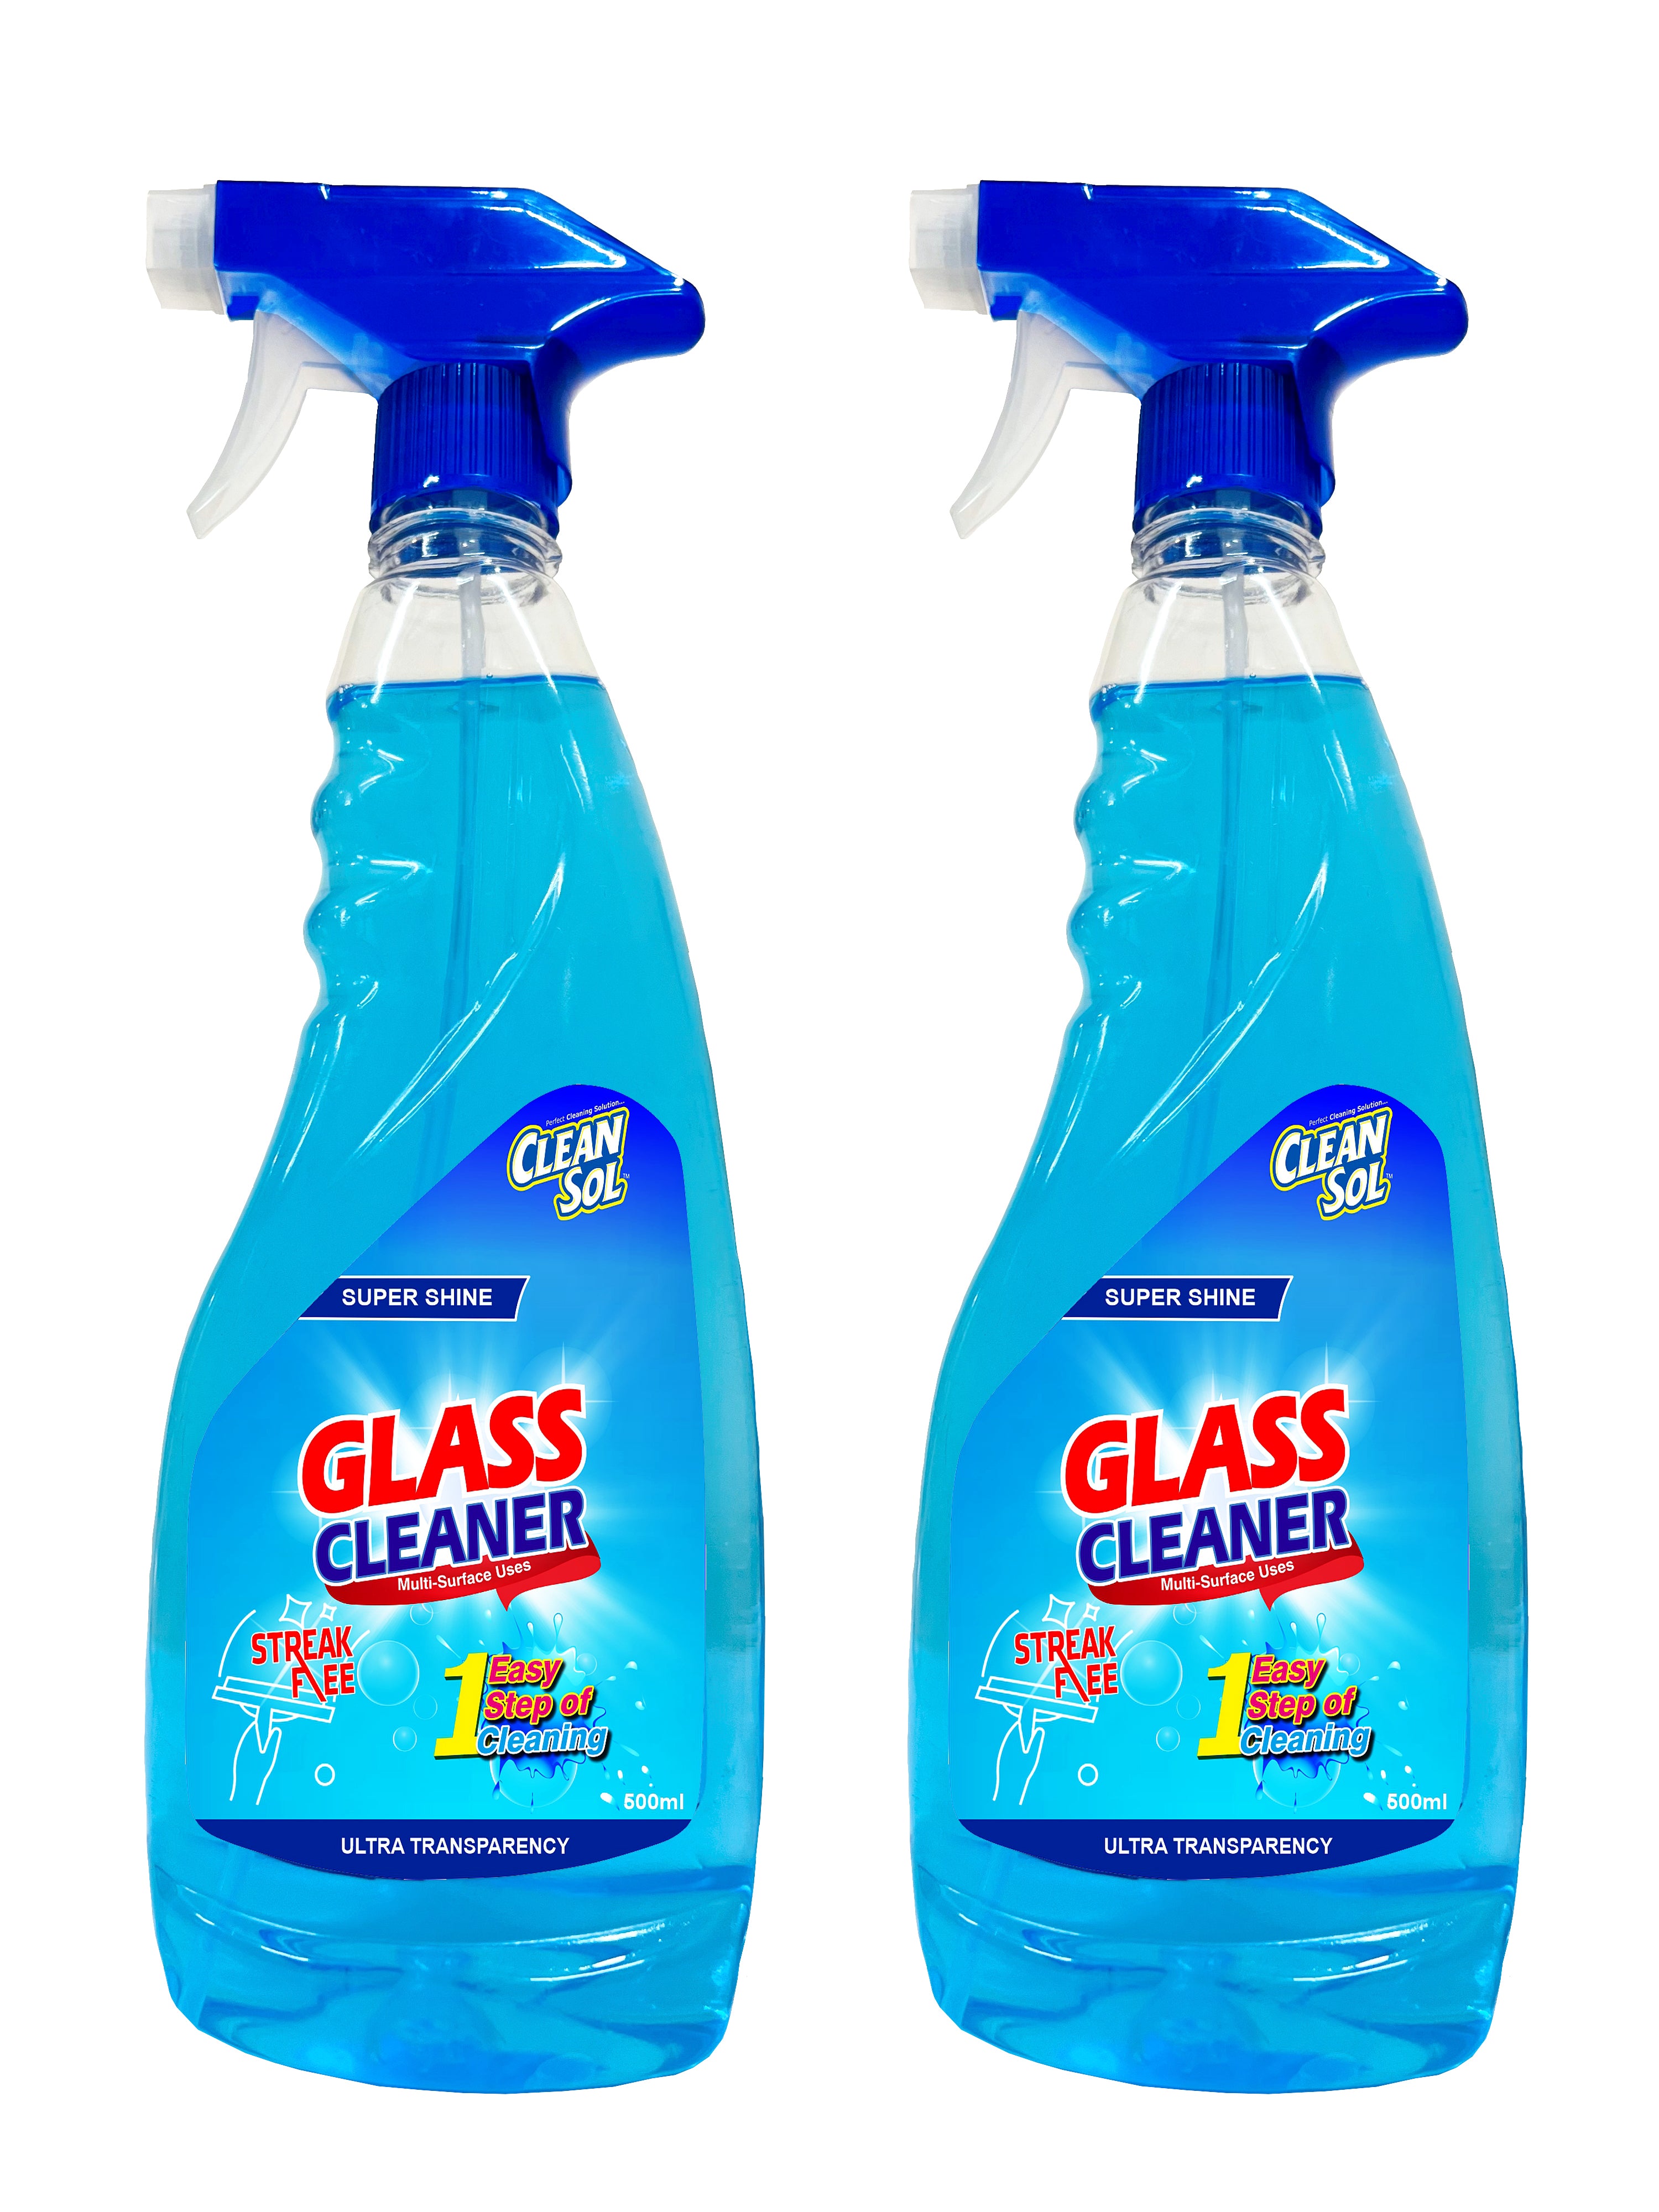 Buy Cleansol Glass Cleaner 5 Litre Liquid Spray - Streak & Ammonia